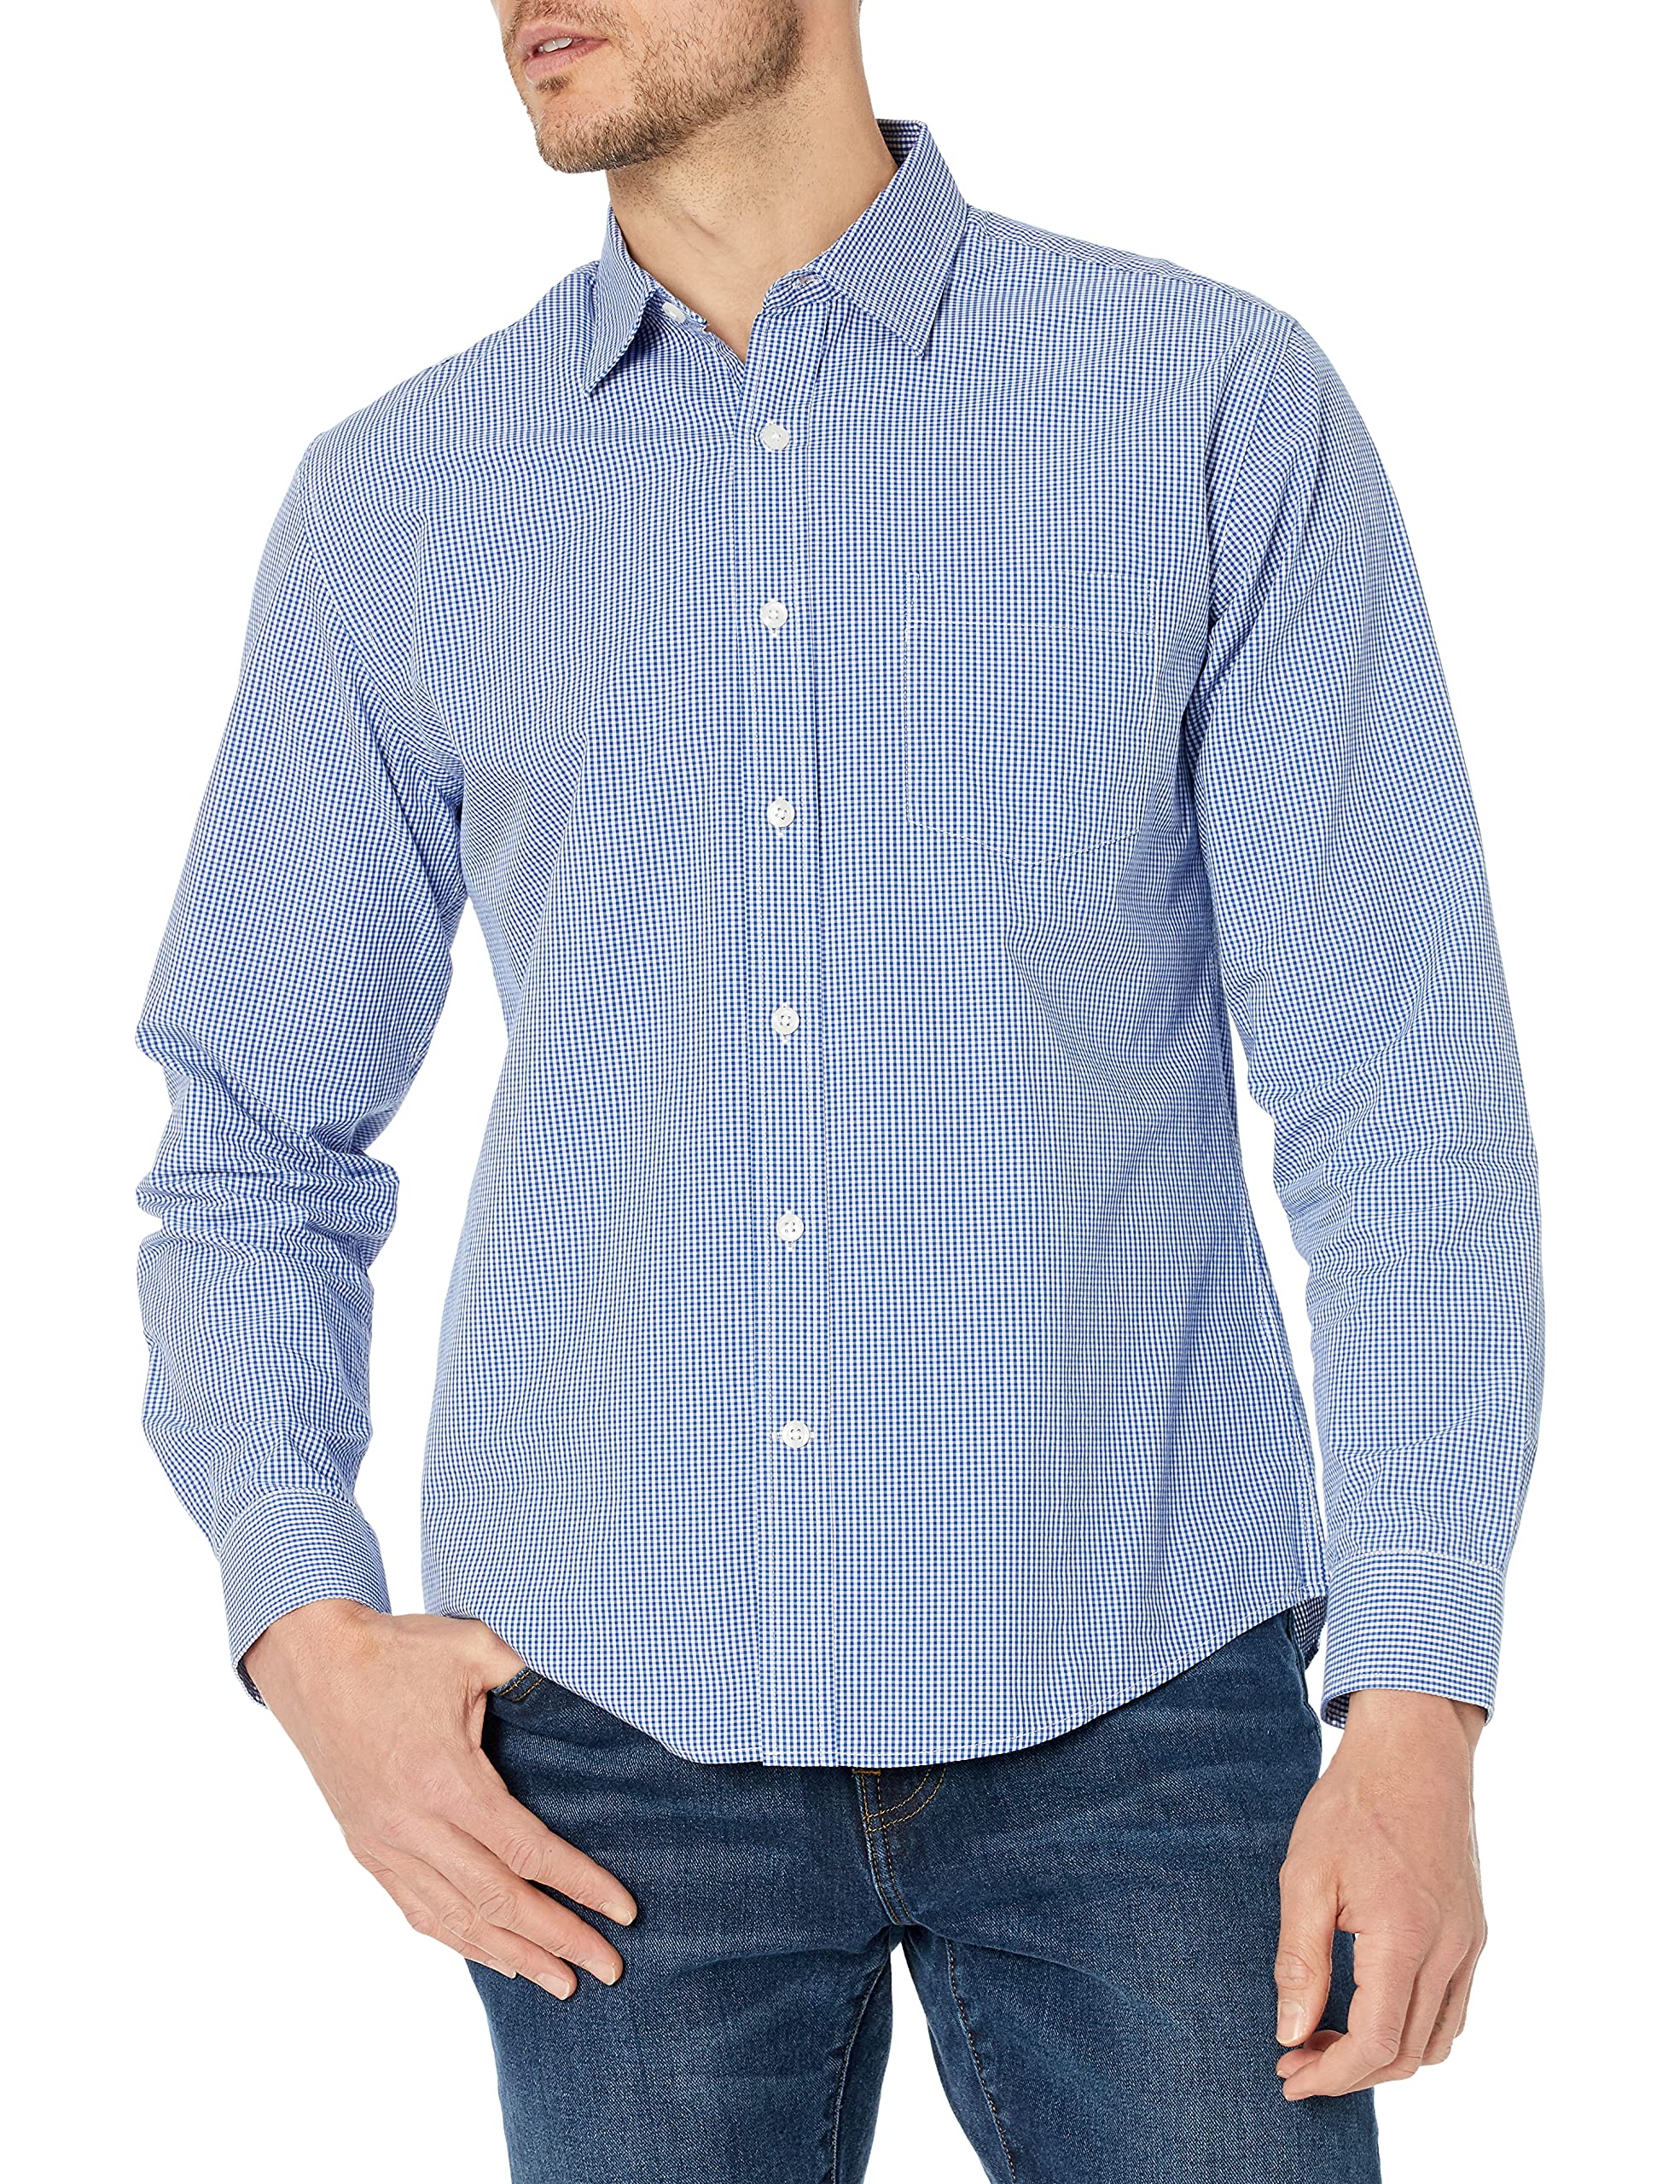 Amazon Essentials Men's Regular-Fit Long-Sleeve Casual Poplin Shirt, Blue Gingham, Large